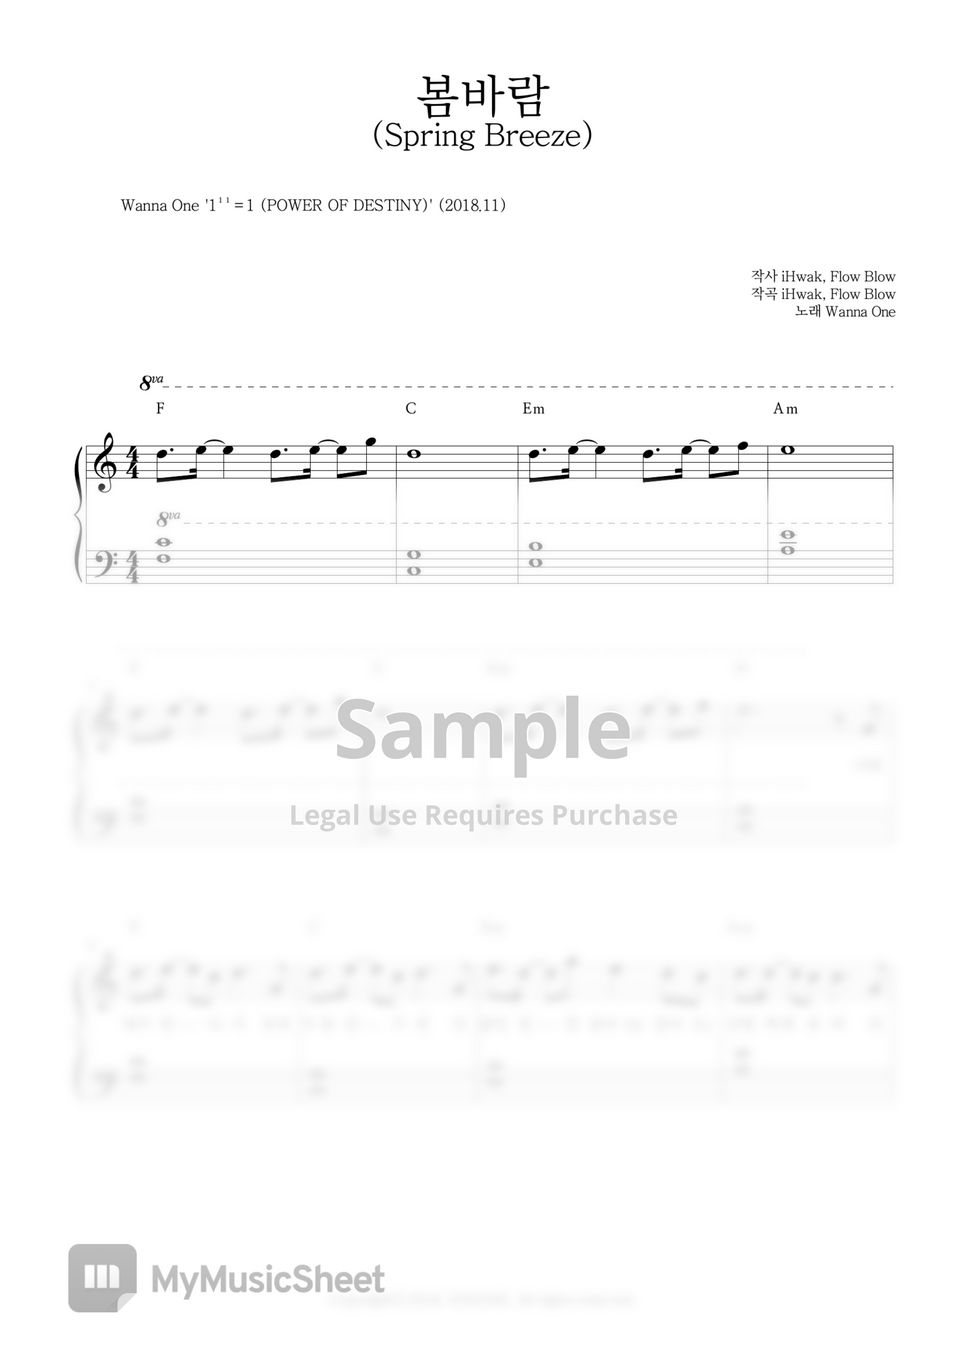 Wanna One '봄바람(Spring Breeze)' Easy Piano Sheet Music